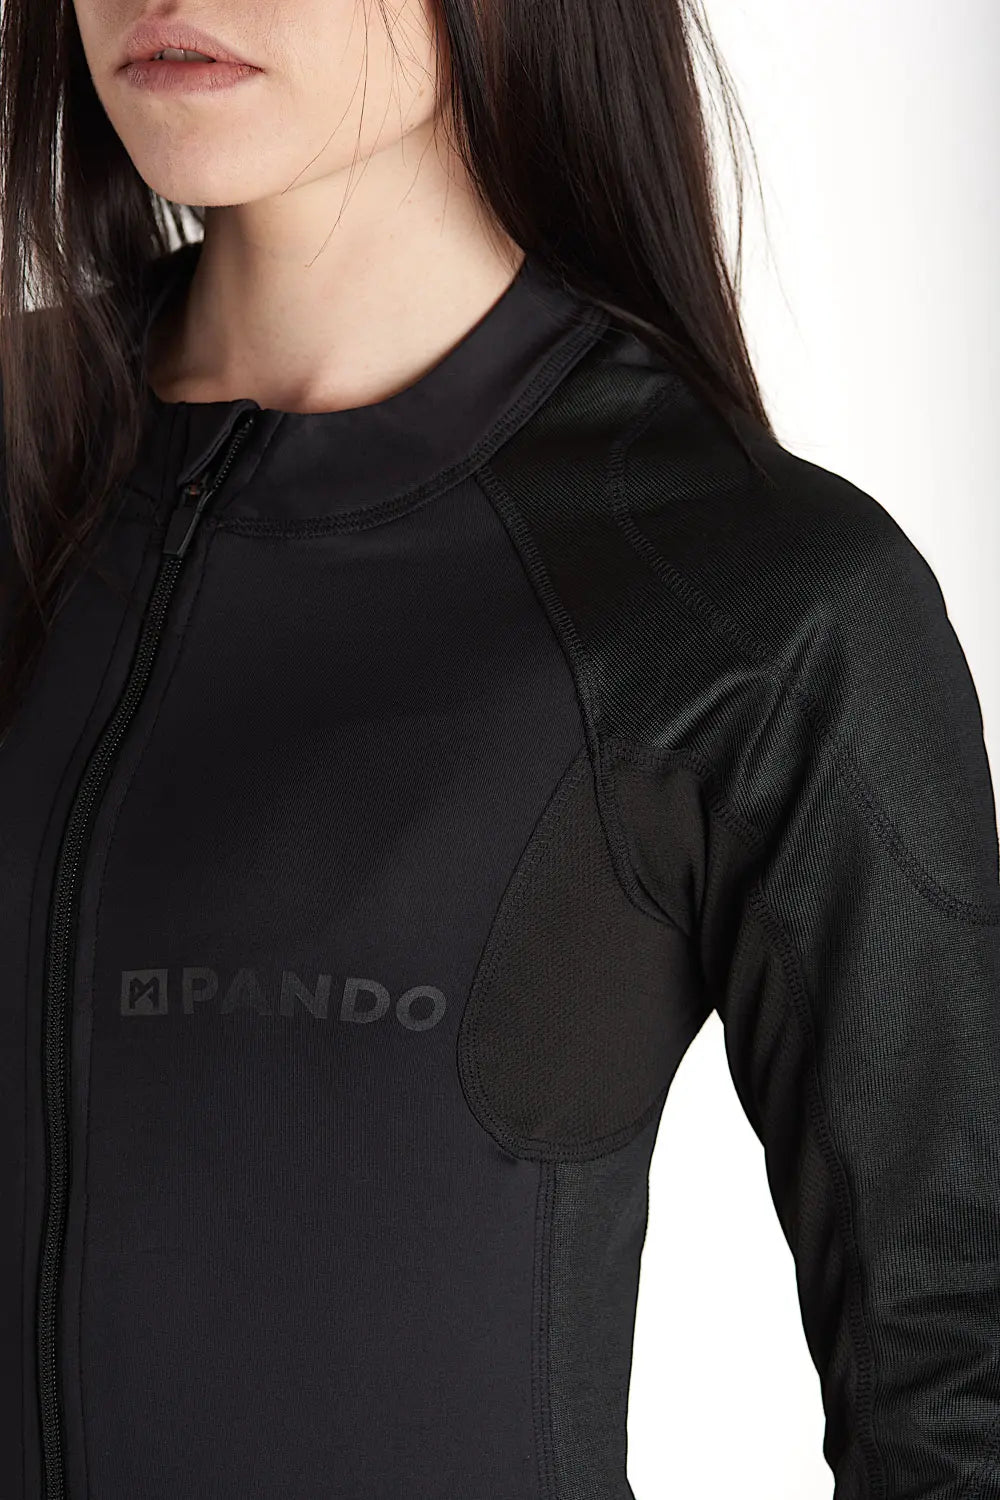 A woman wearing black tight motorcycle underwear with Pando Moto Logo